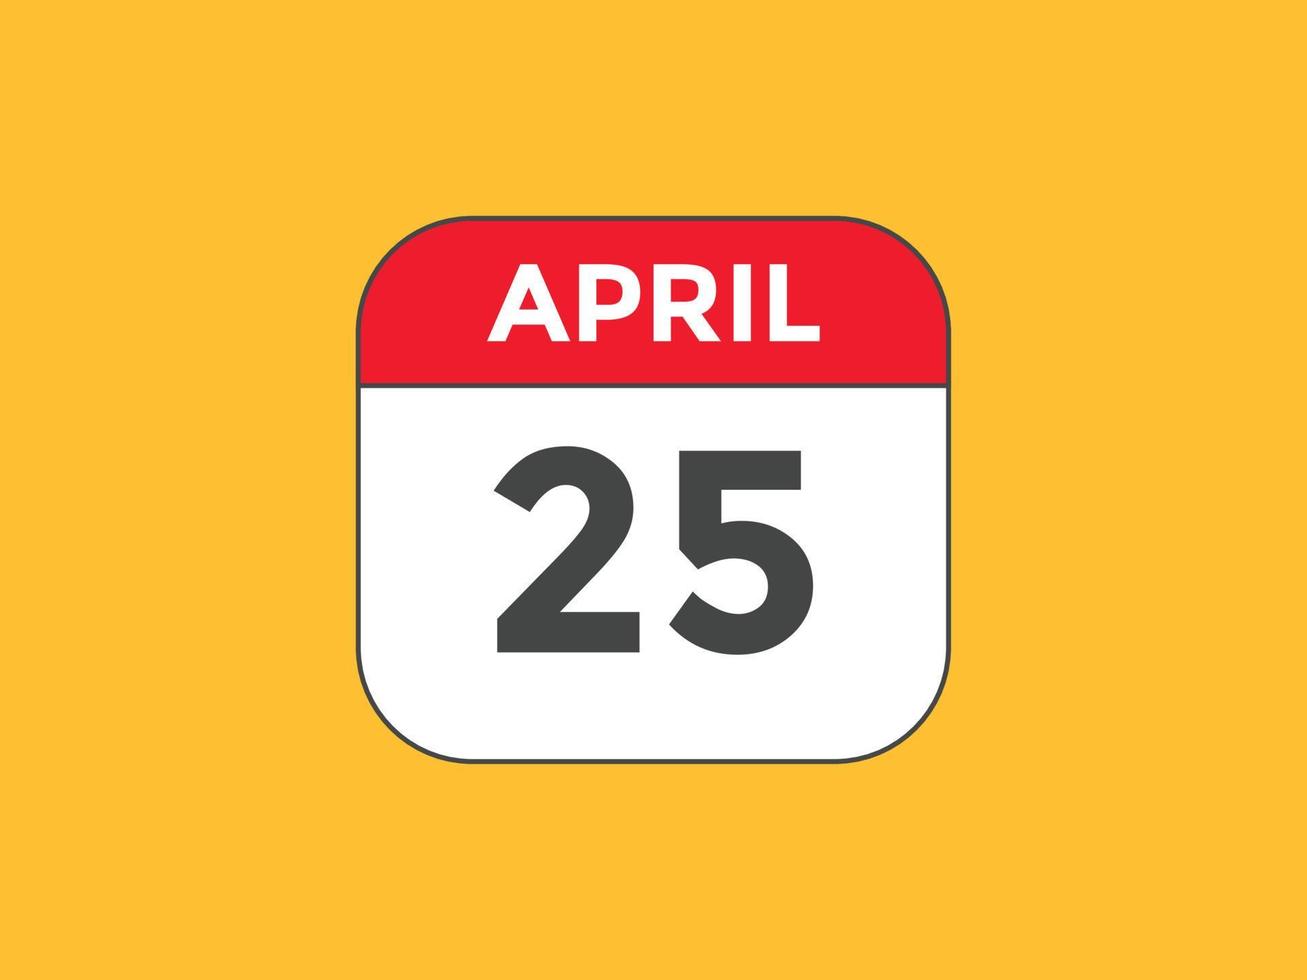 april 25 calendar reminder. 25th april daily calendar icon template. Calendar 25th april icon Design template. Vector illustration